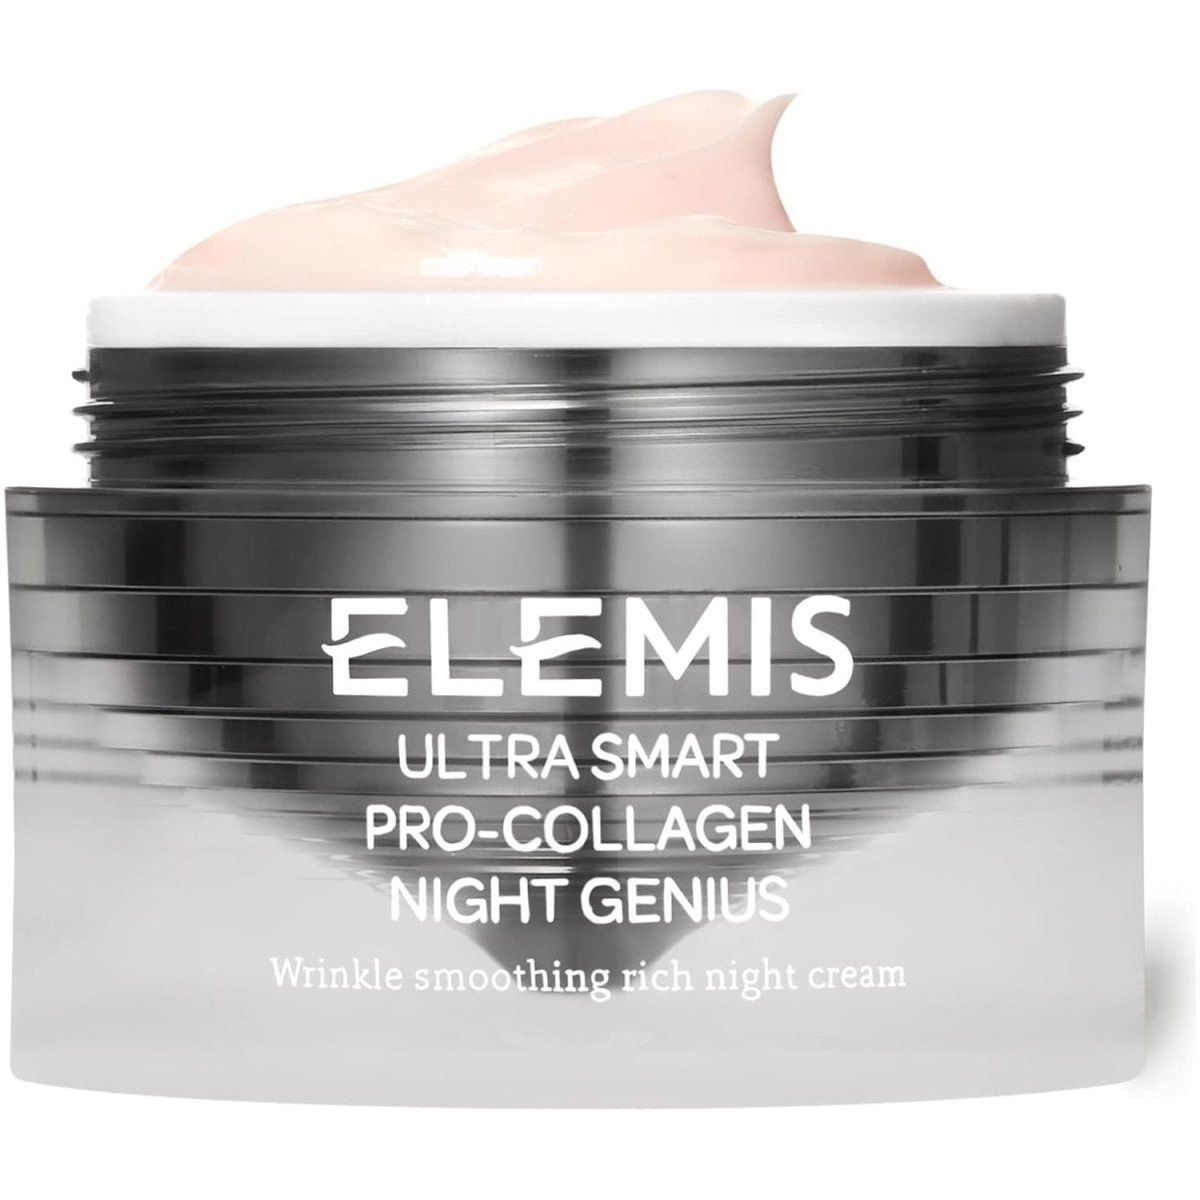 Elemis Ultra Smart Pro-Collagen Night Genius, 50 ml - DG International Ventures Limited